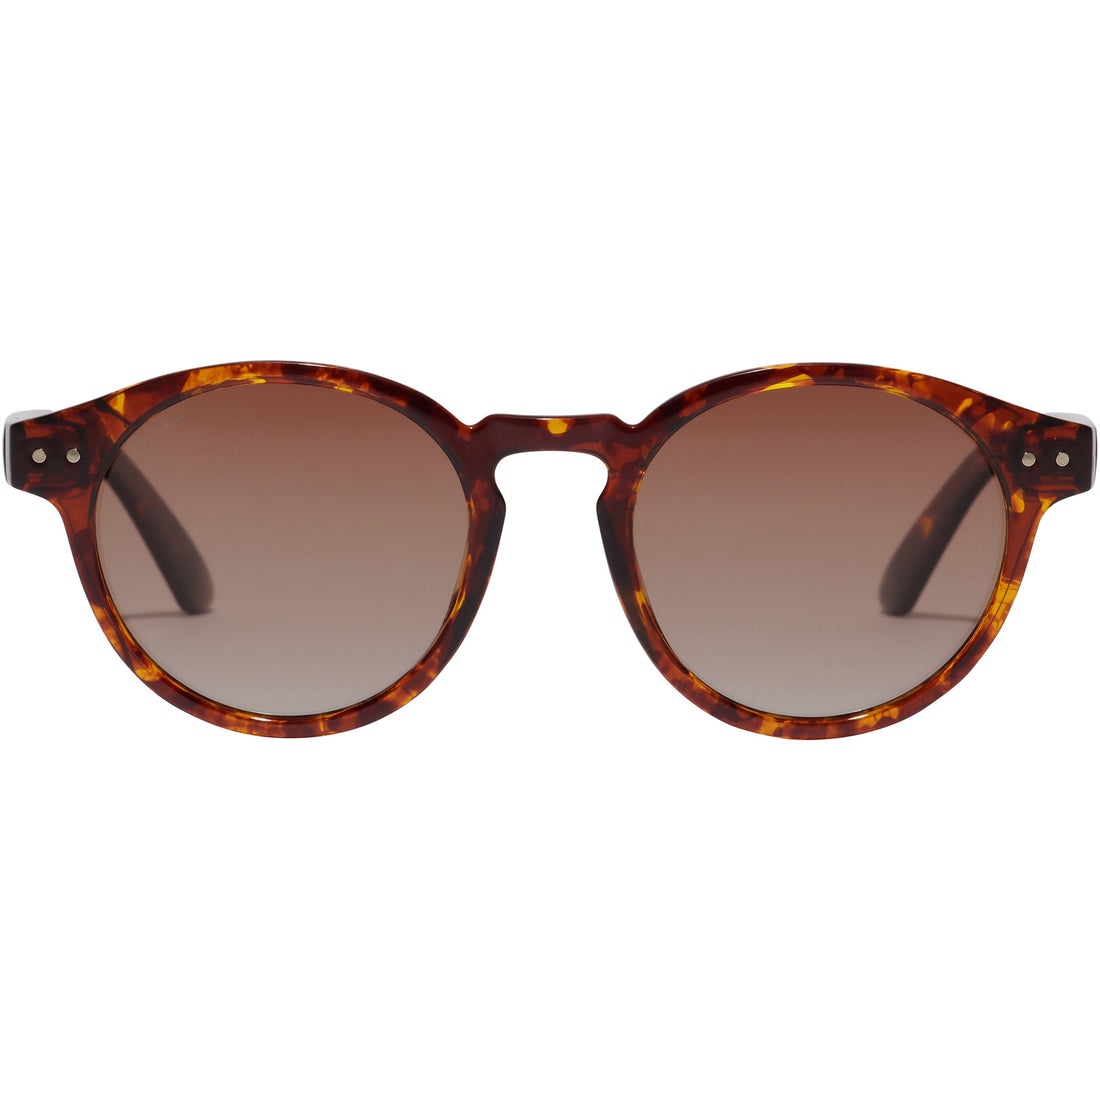 KYRIE sunglasses tortoise brown/gold - PILGRIM